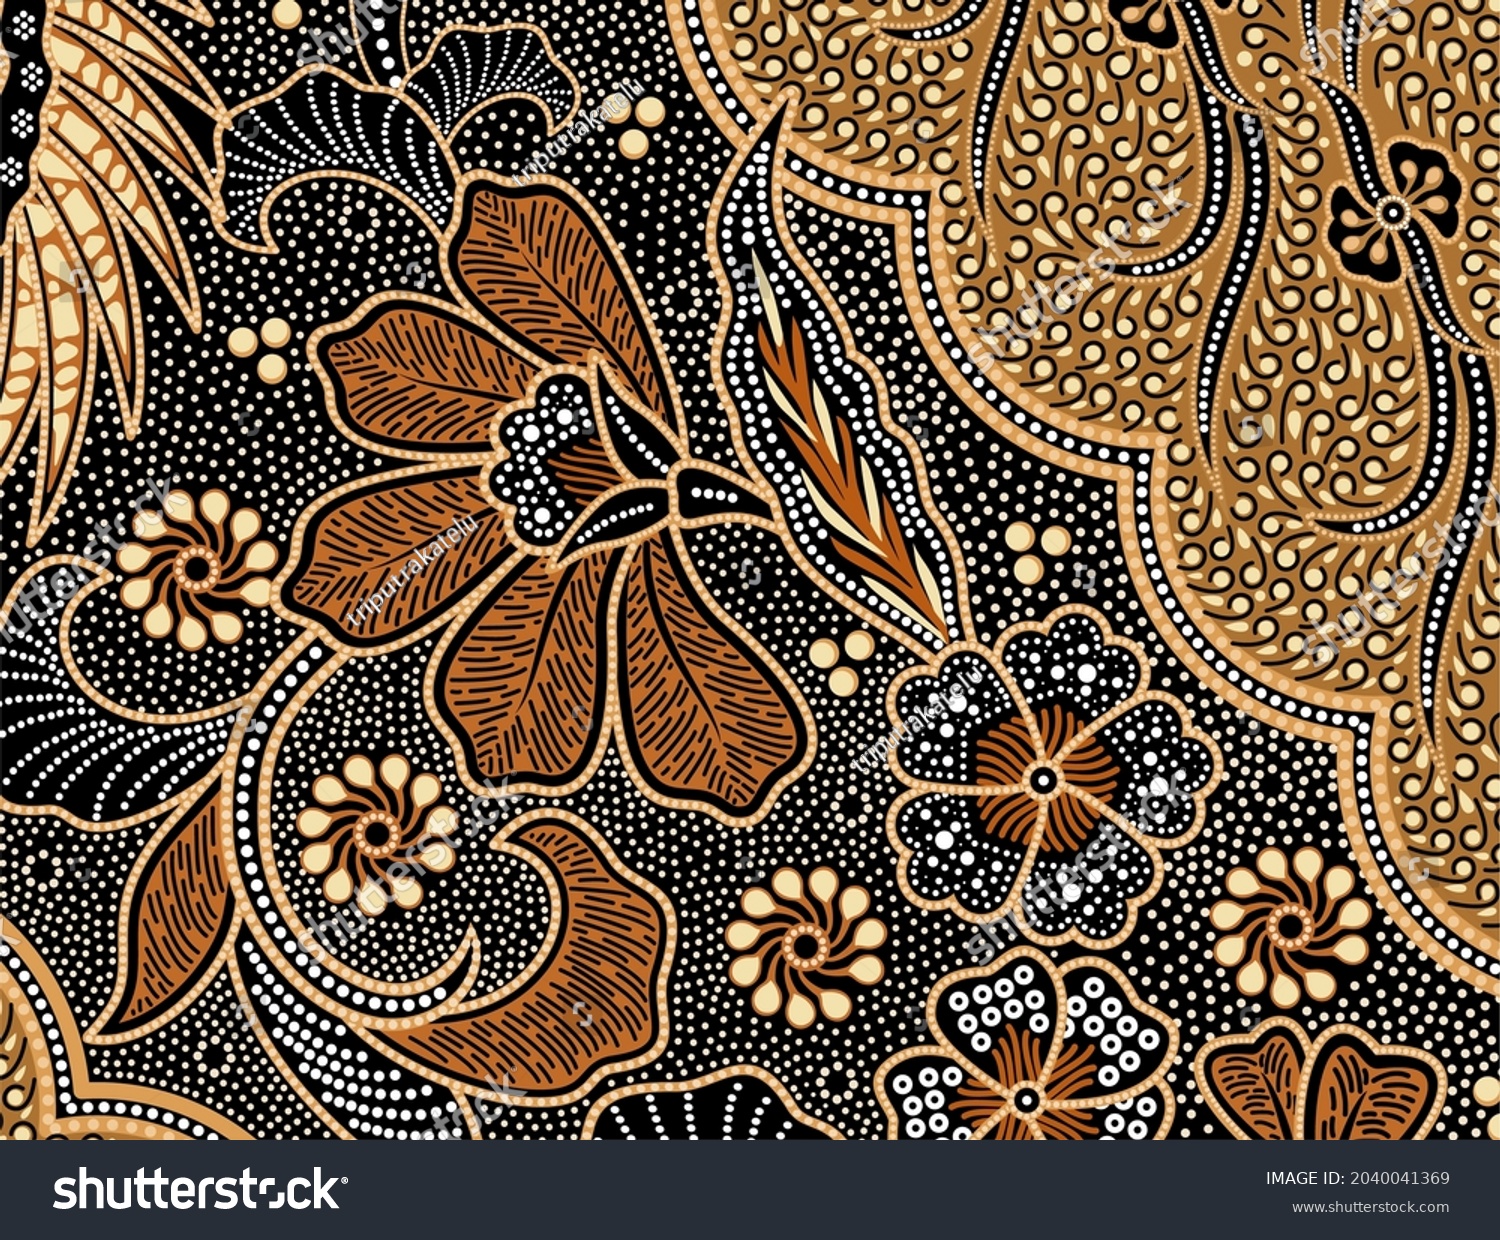 1,461,508 Batik Images, Stock Photos & Vectors | Shutterstock